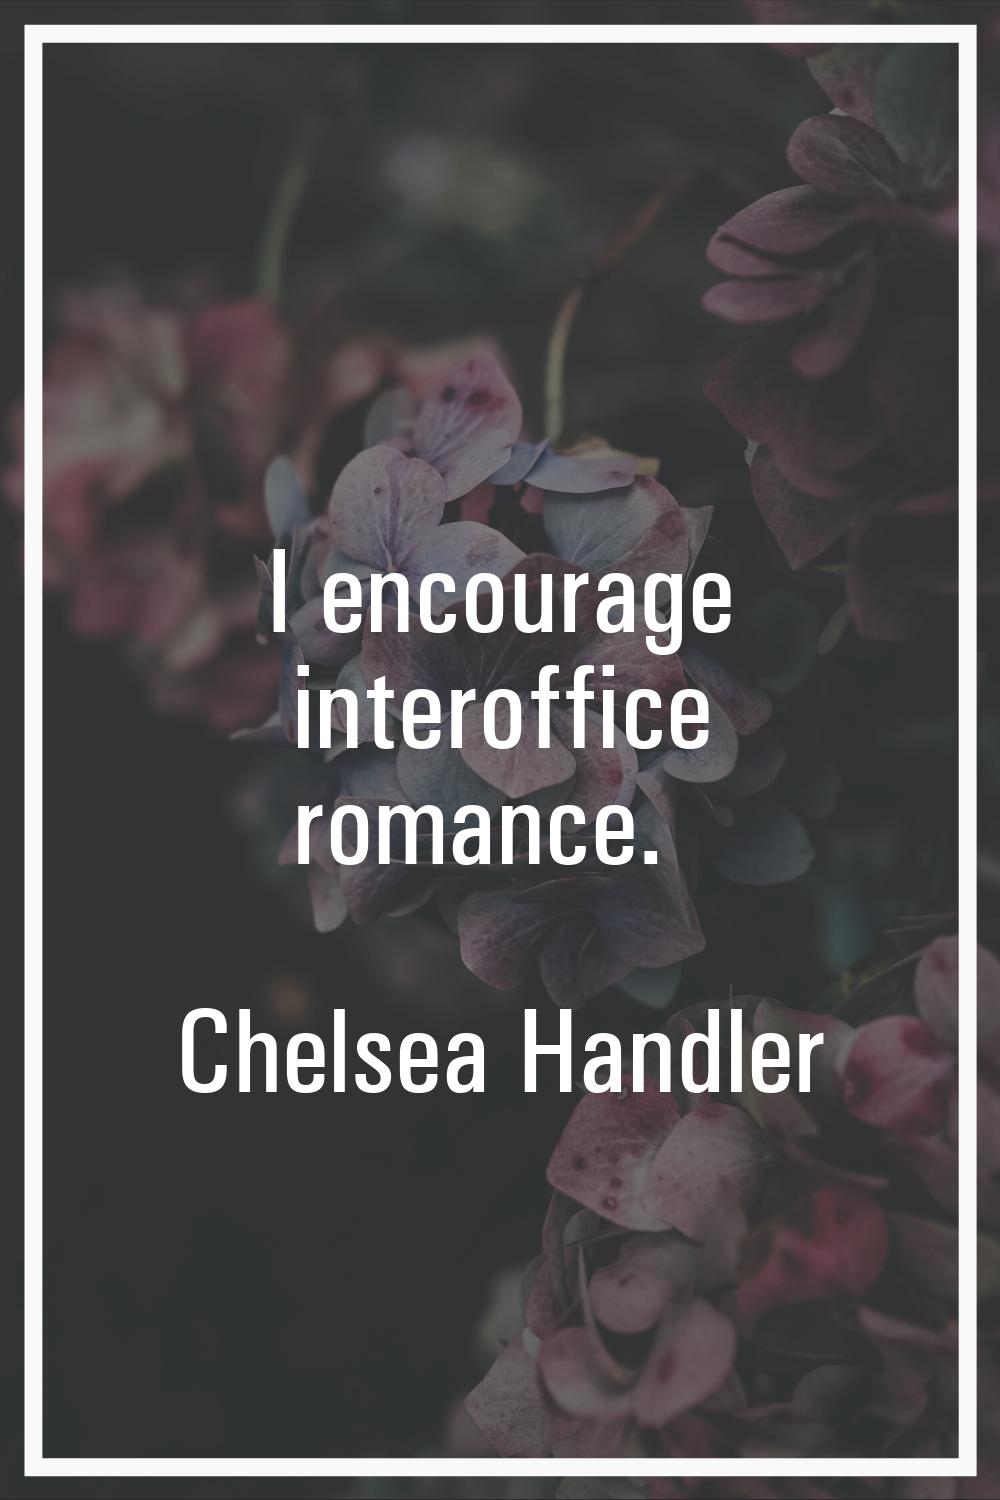 I encourage interoffice romance.